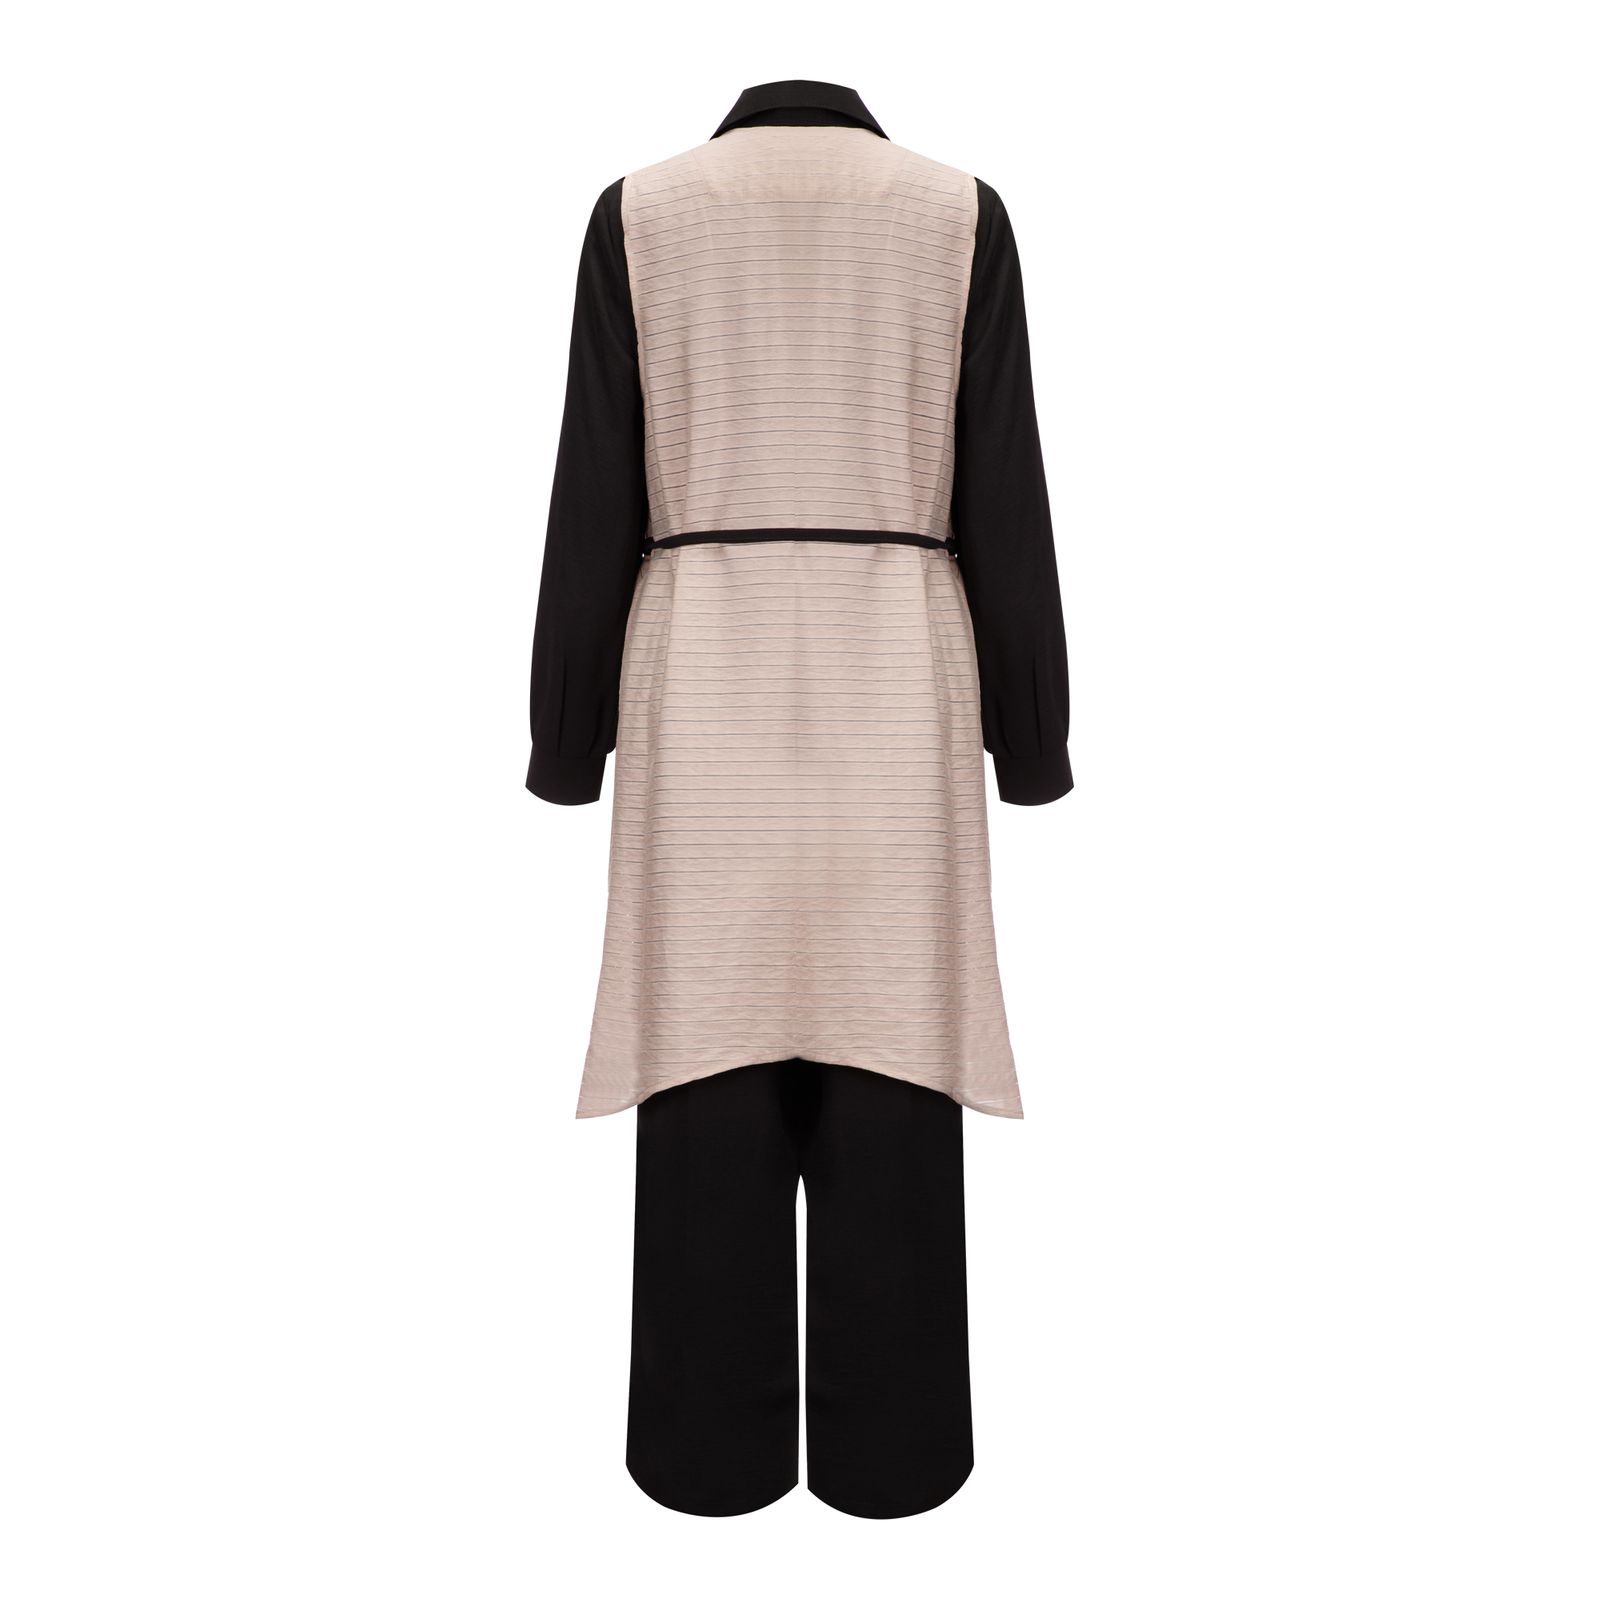 ست 3 تکه لباس زنانه السانا مدل روژیار کد 82801 -  - 7